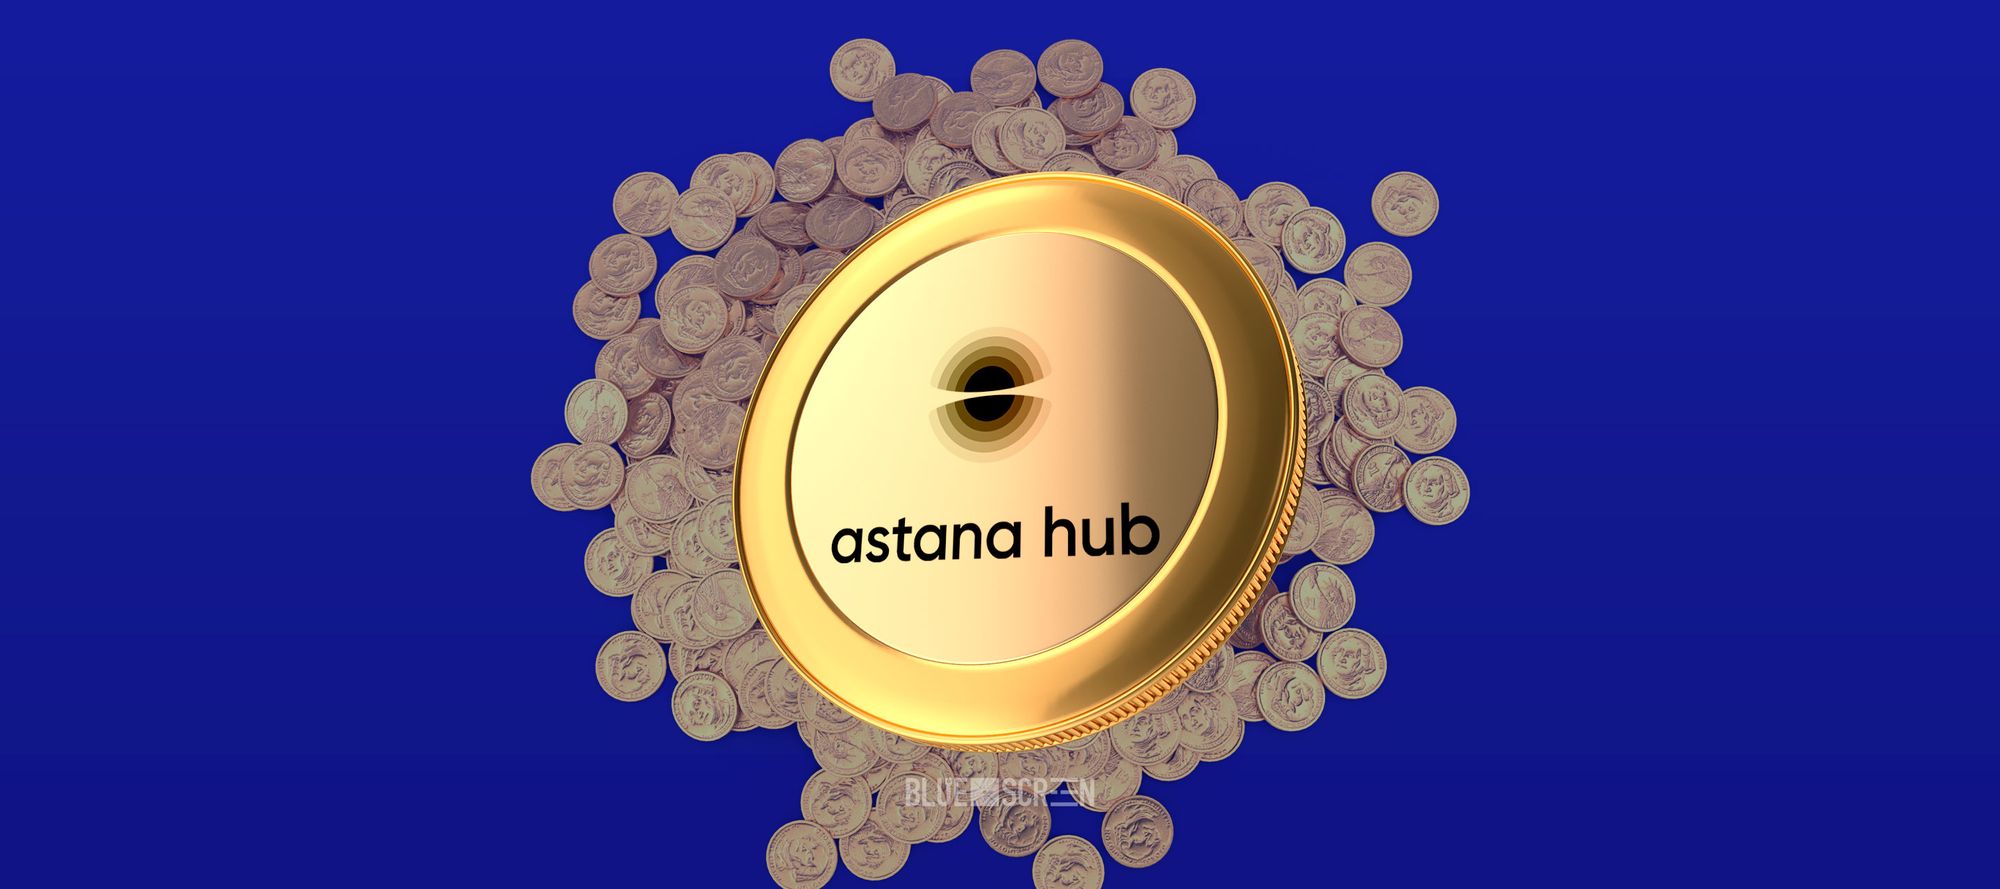 Доход участников Astana Hub составил 147,7 млрд. тенге